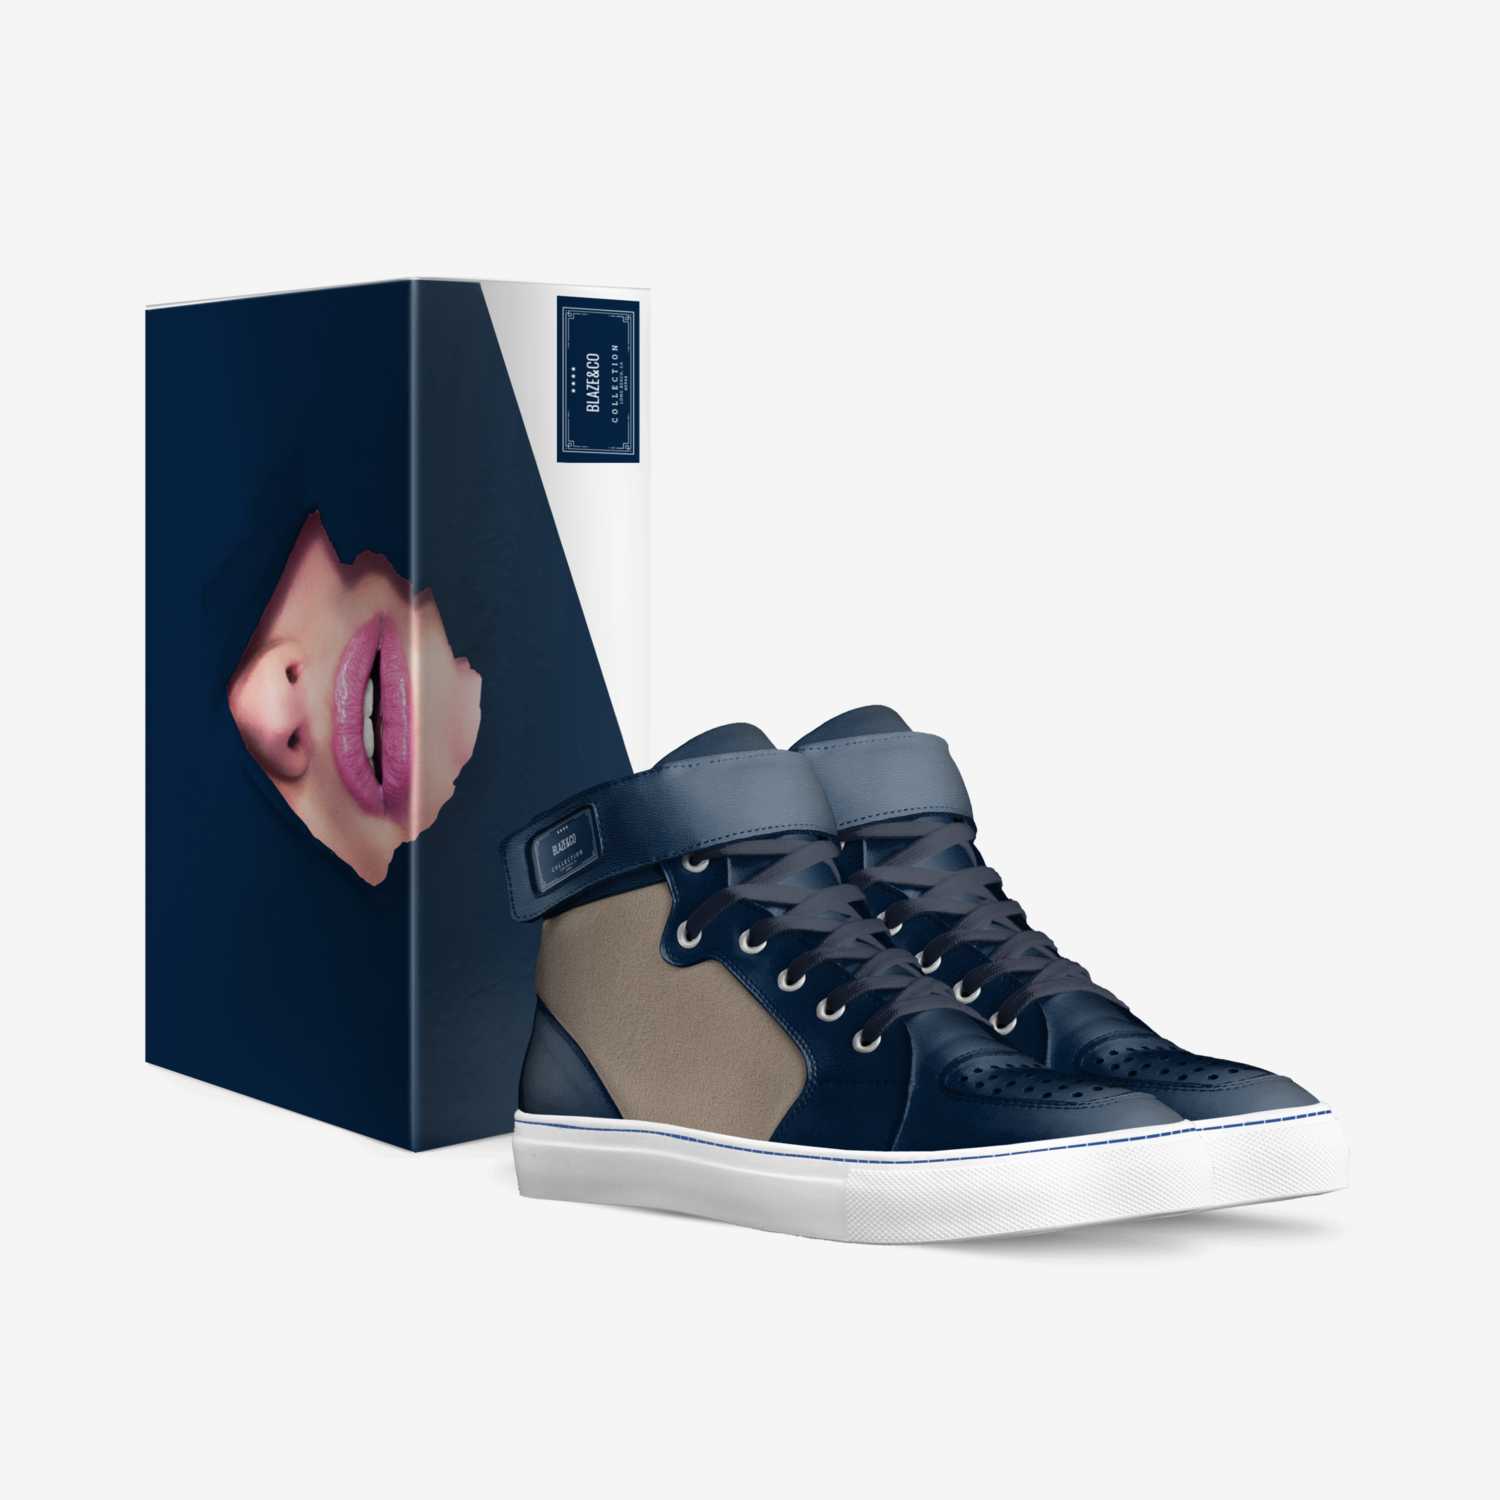 Travelerz 1.0 custom made in Italy shoes by Skylar Trujillo | Box view